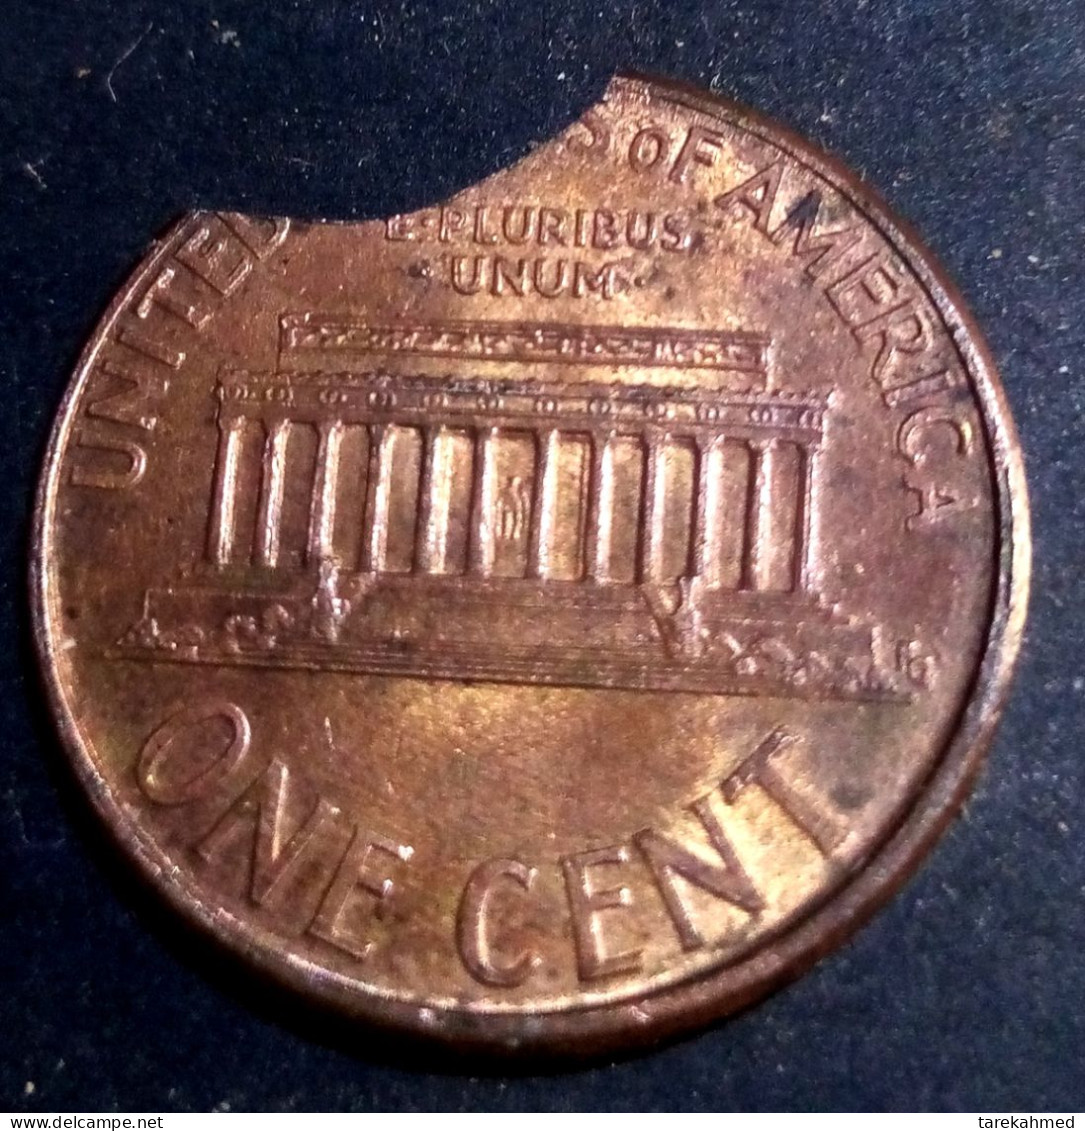 USA 1999, CLIPPED PLANCHET ERROR LINCOLN MEMORIAL PENNY CENT Coin, Gomaa - 1959-…: Lincoln, Memorial Reverse